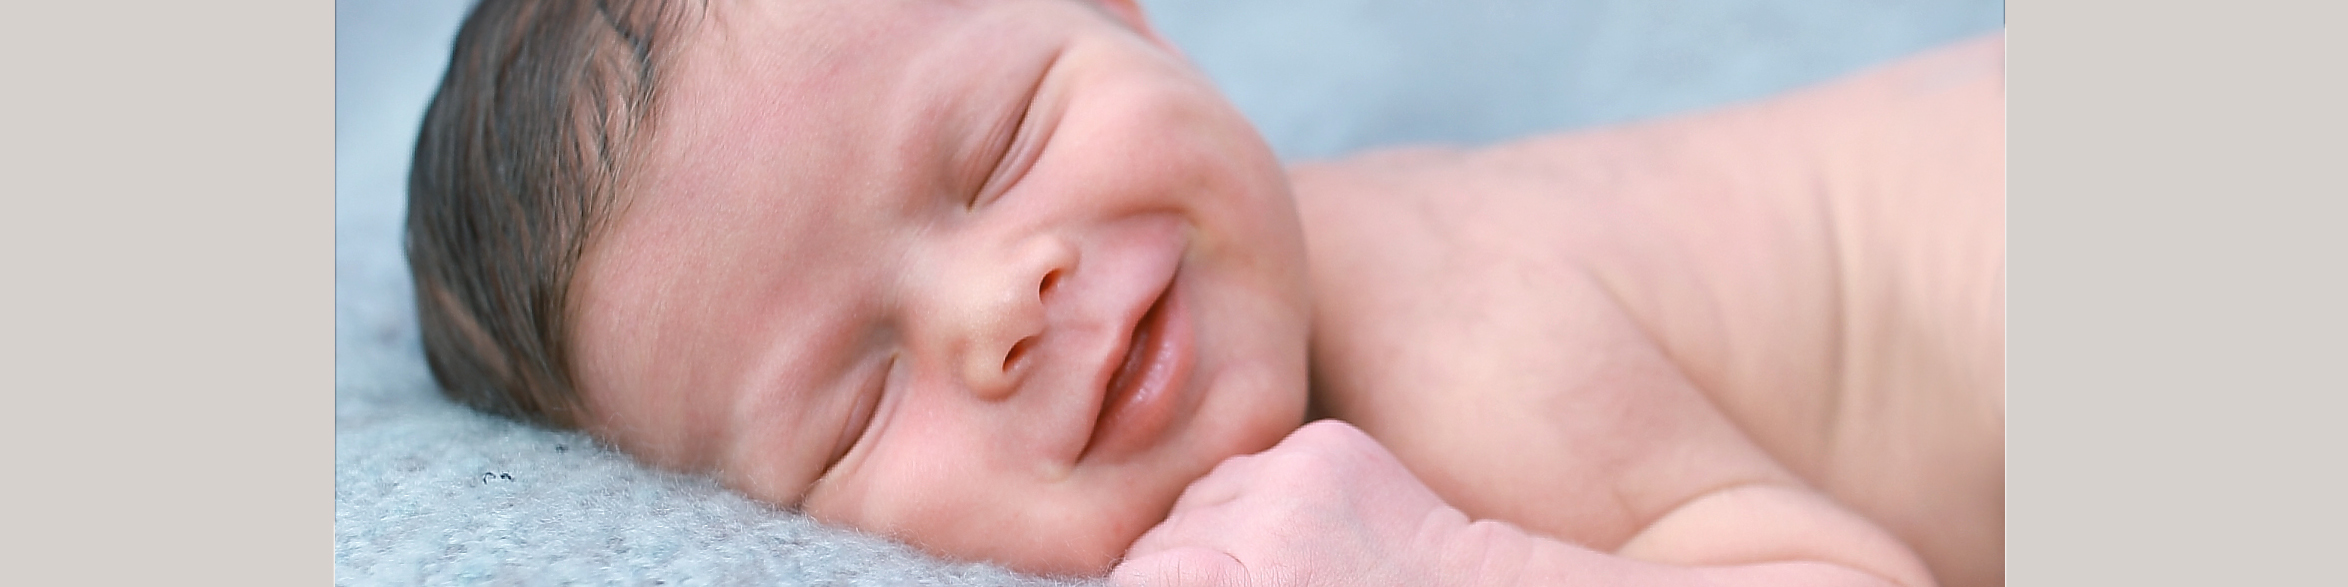 Photograph of a newborn baby